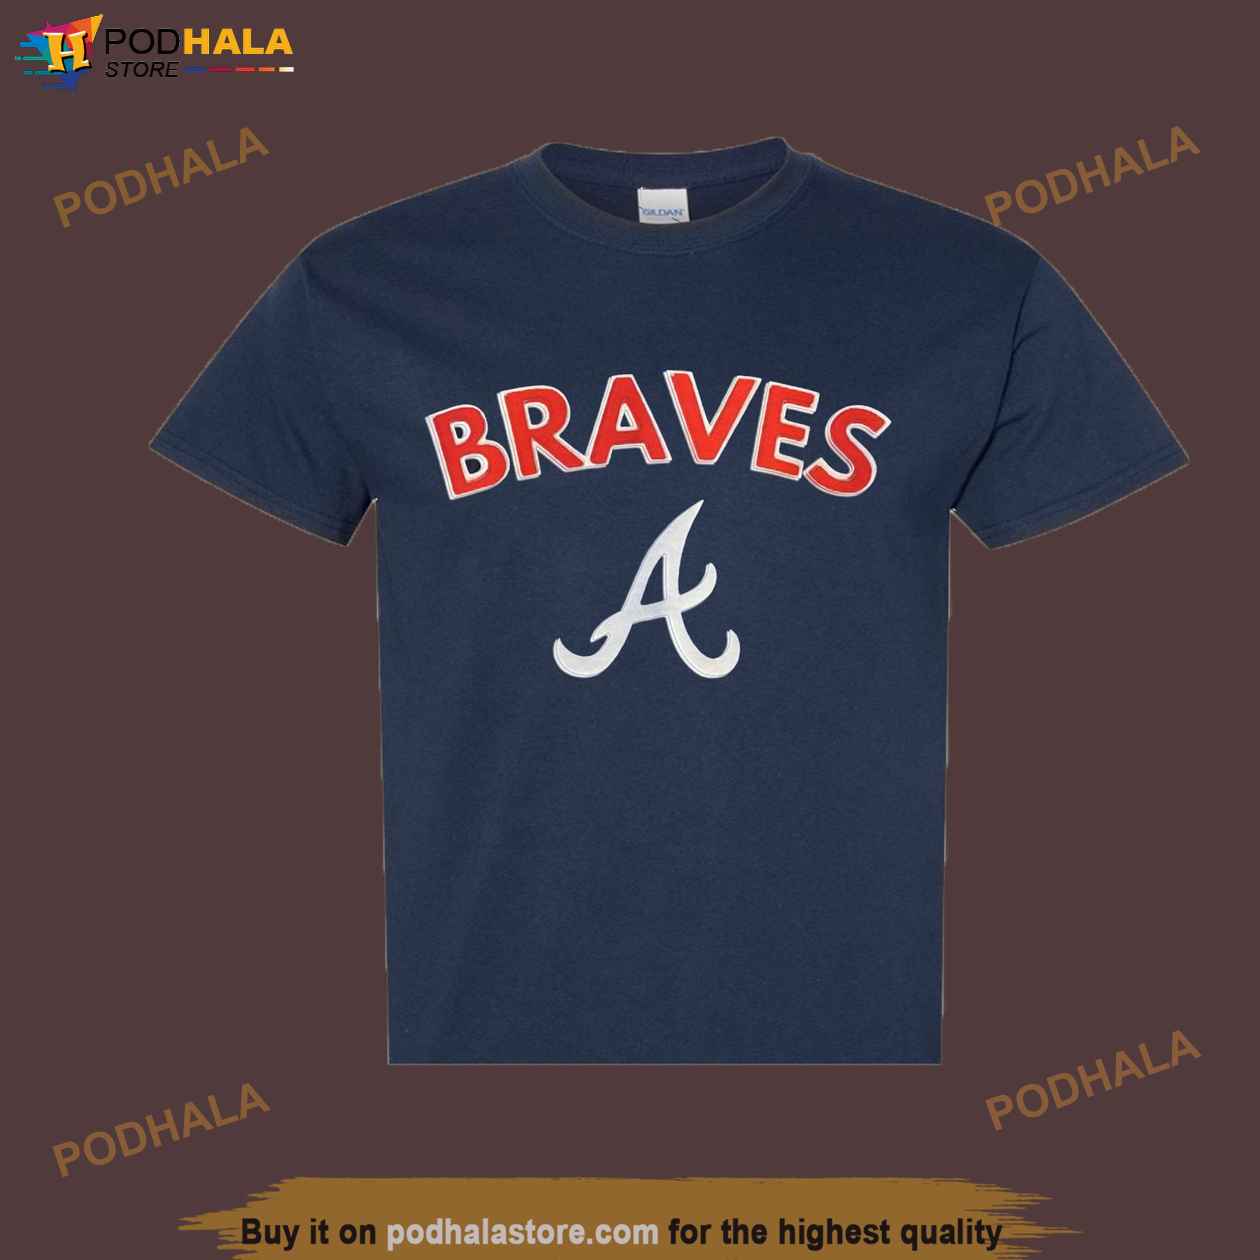 98 Braves Morgan Wallen Baseball 2 Sides Shirt, Atlanta Braves TShirt -  Bring Your Ideas, Thoughts And Imaginations Into Reality Today